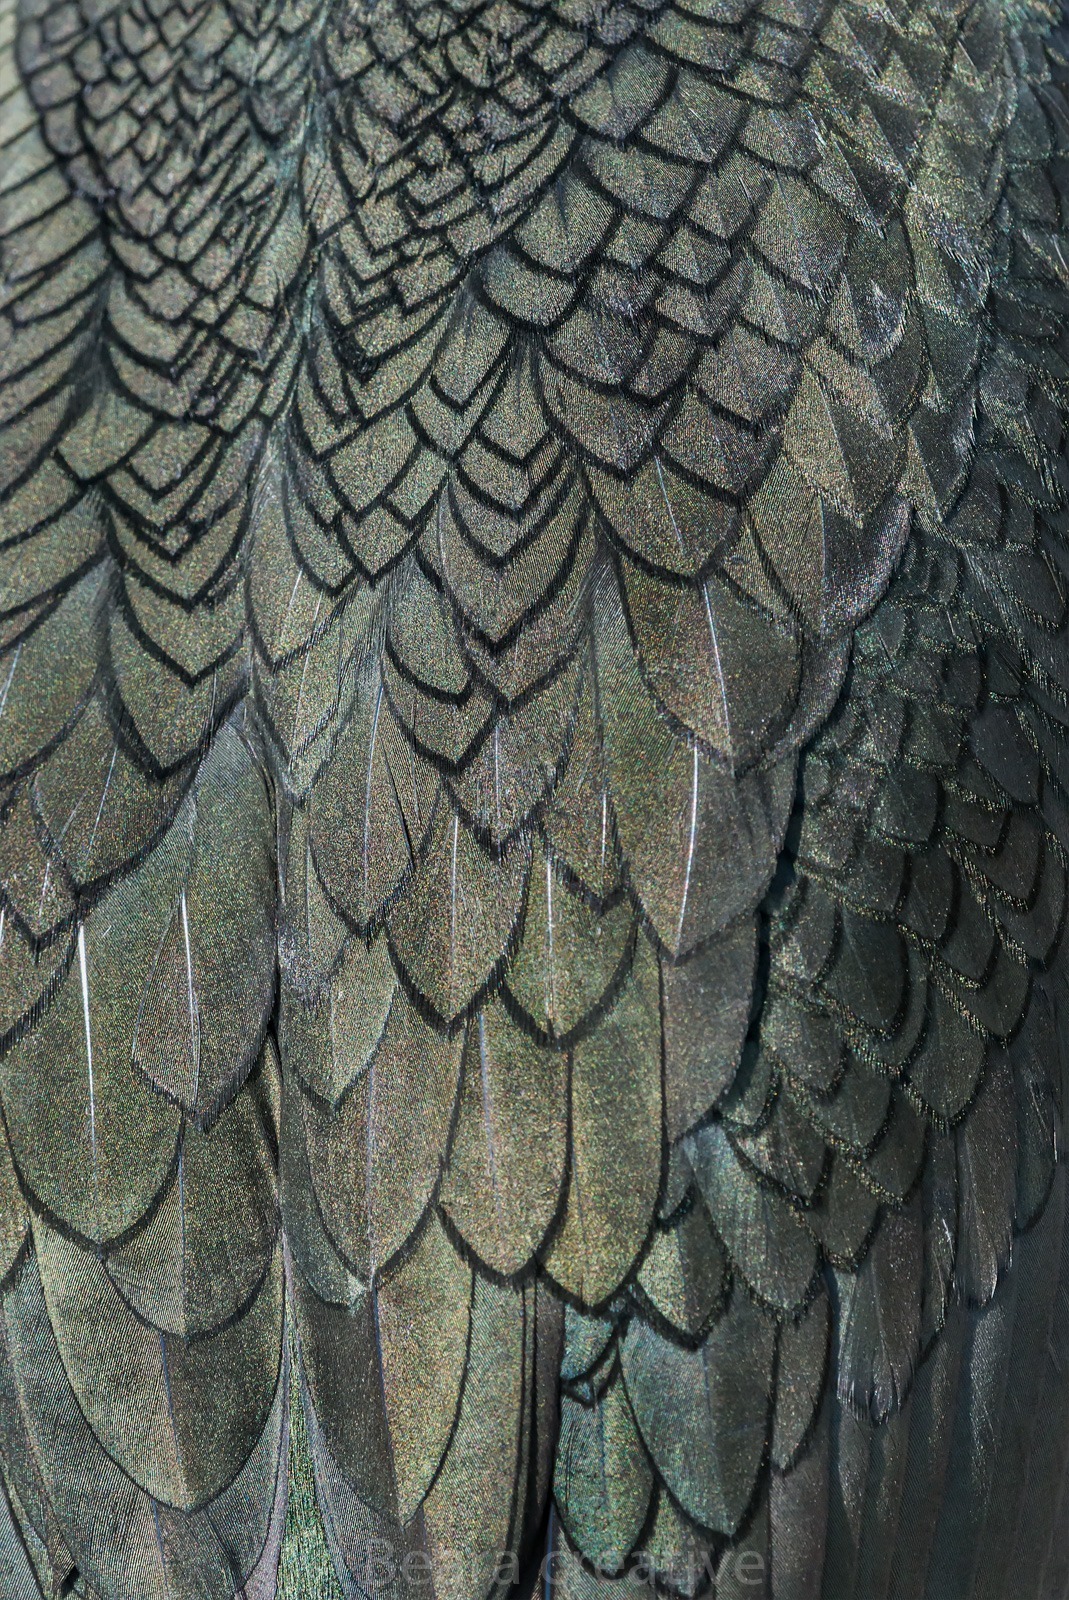 Close up detail of shag plumage